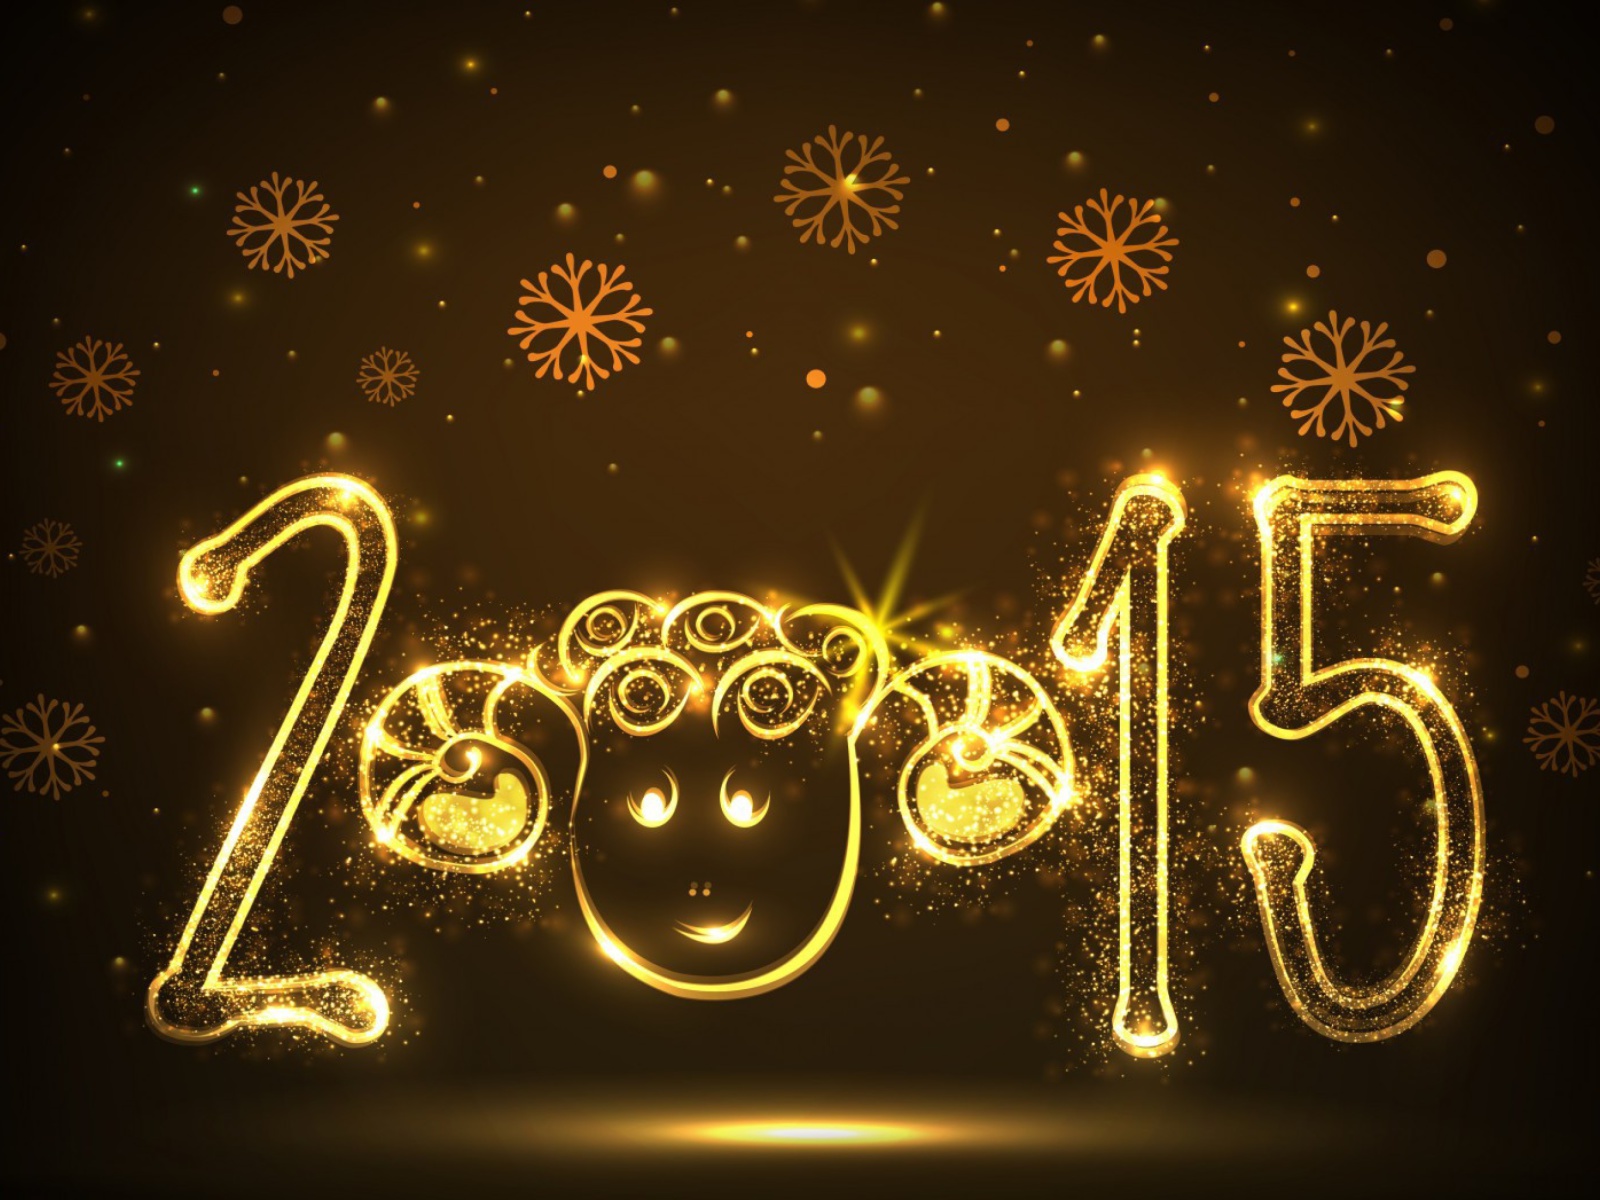 Golden Lights Happy New Year 2015 wallpaper 1600x1200